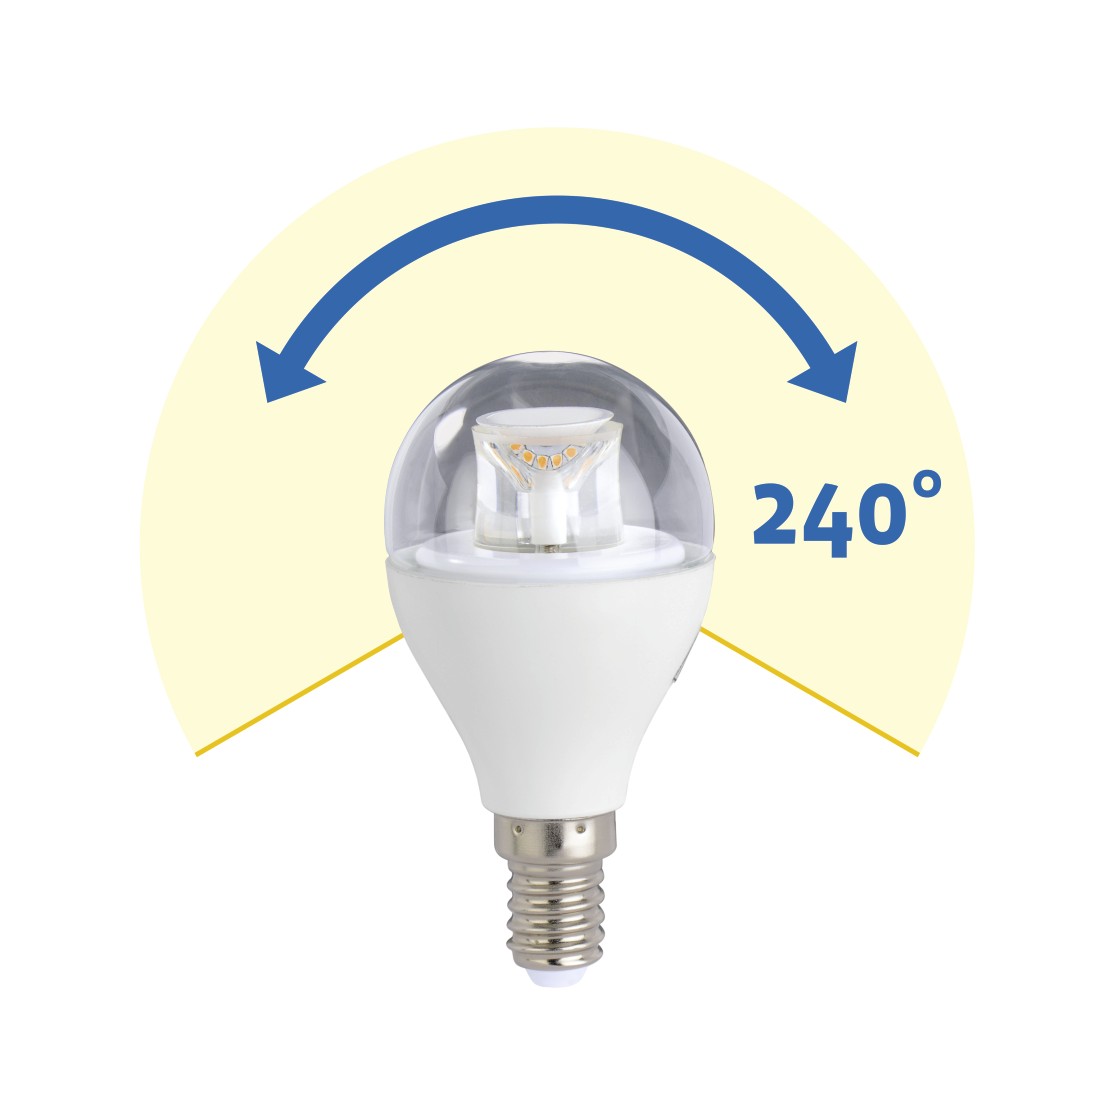 awx Druckfähige Anwendung - Xavax, LED-Lampe, E14, 470lm ersetzt 40W, Tropfenlampe, Warmweiß, dimmbar